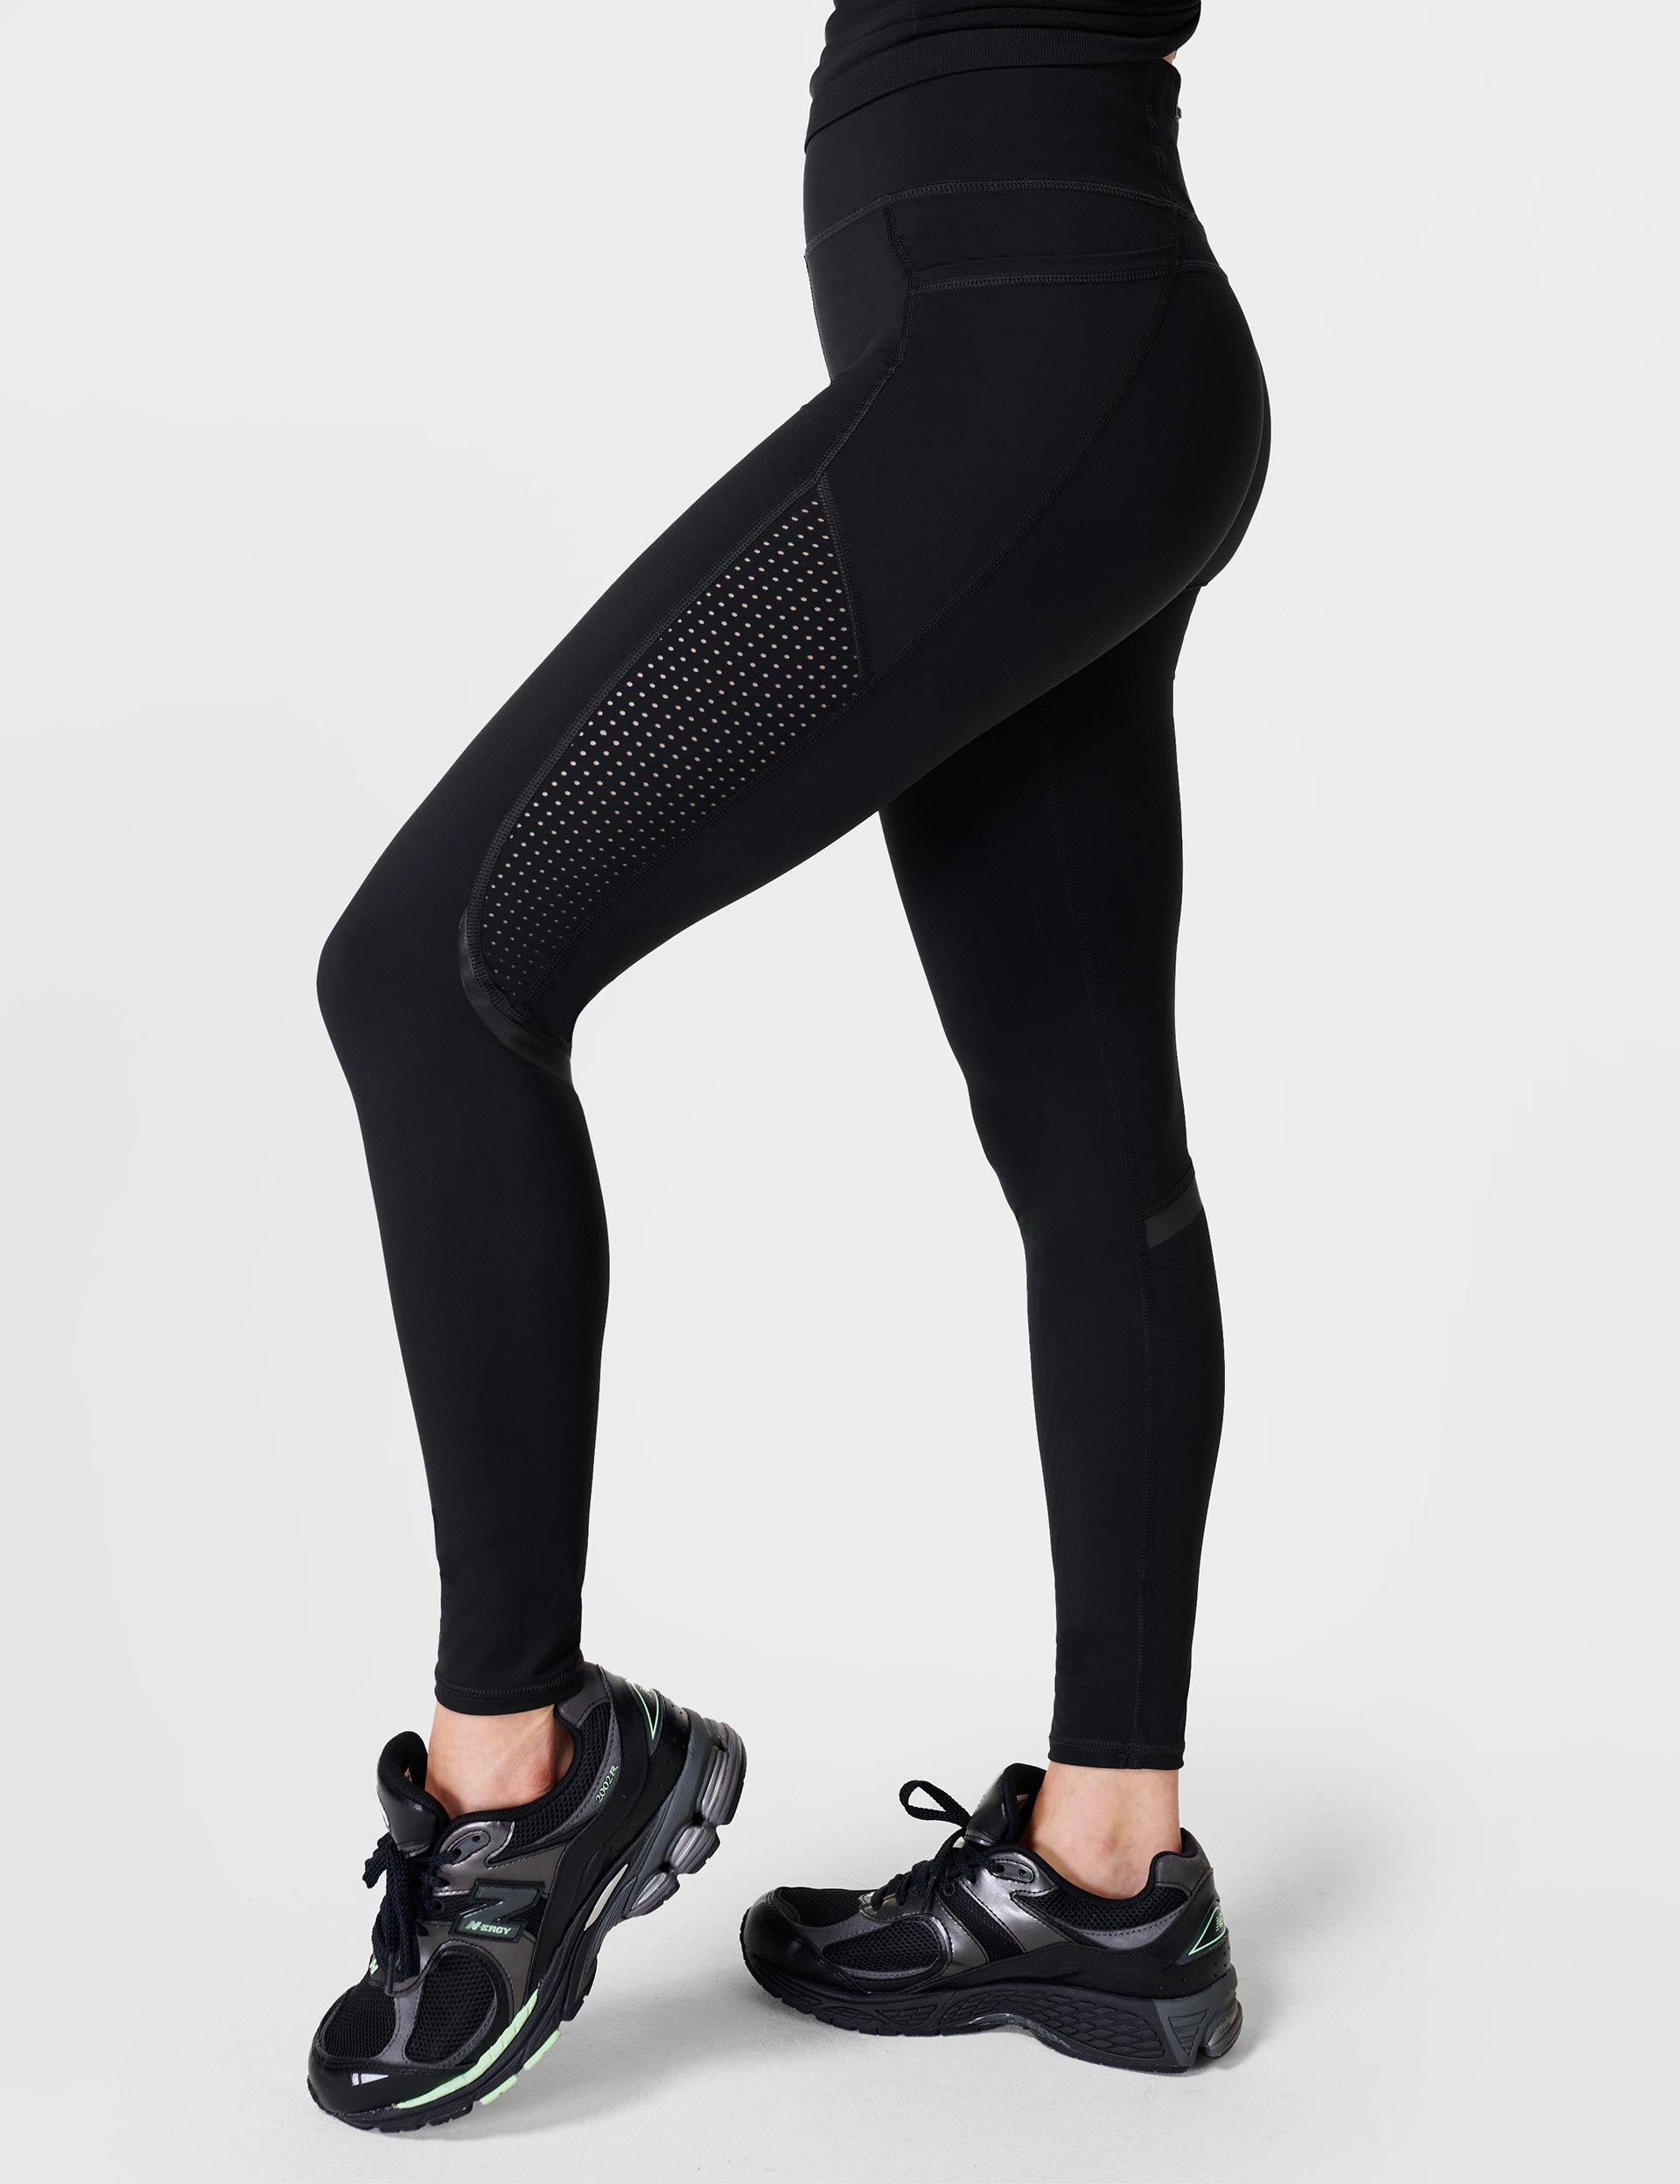 Sweaty Betty Thermodynamic Running Legging in Black